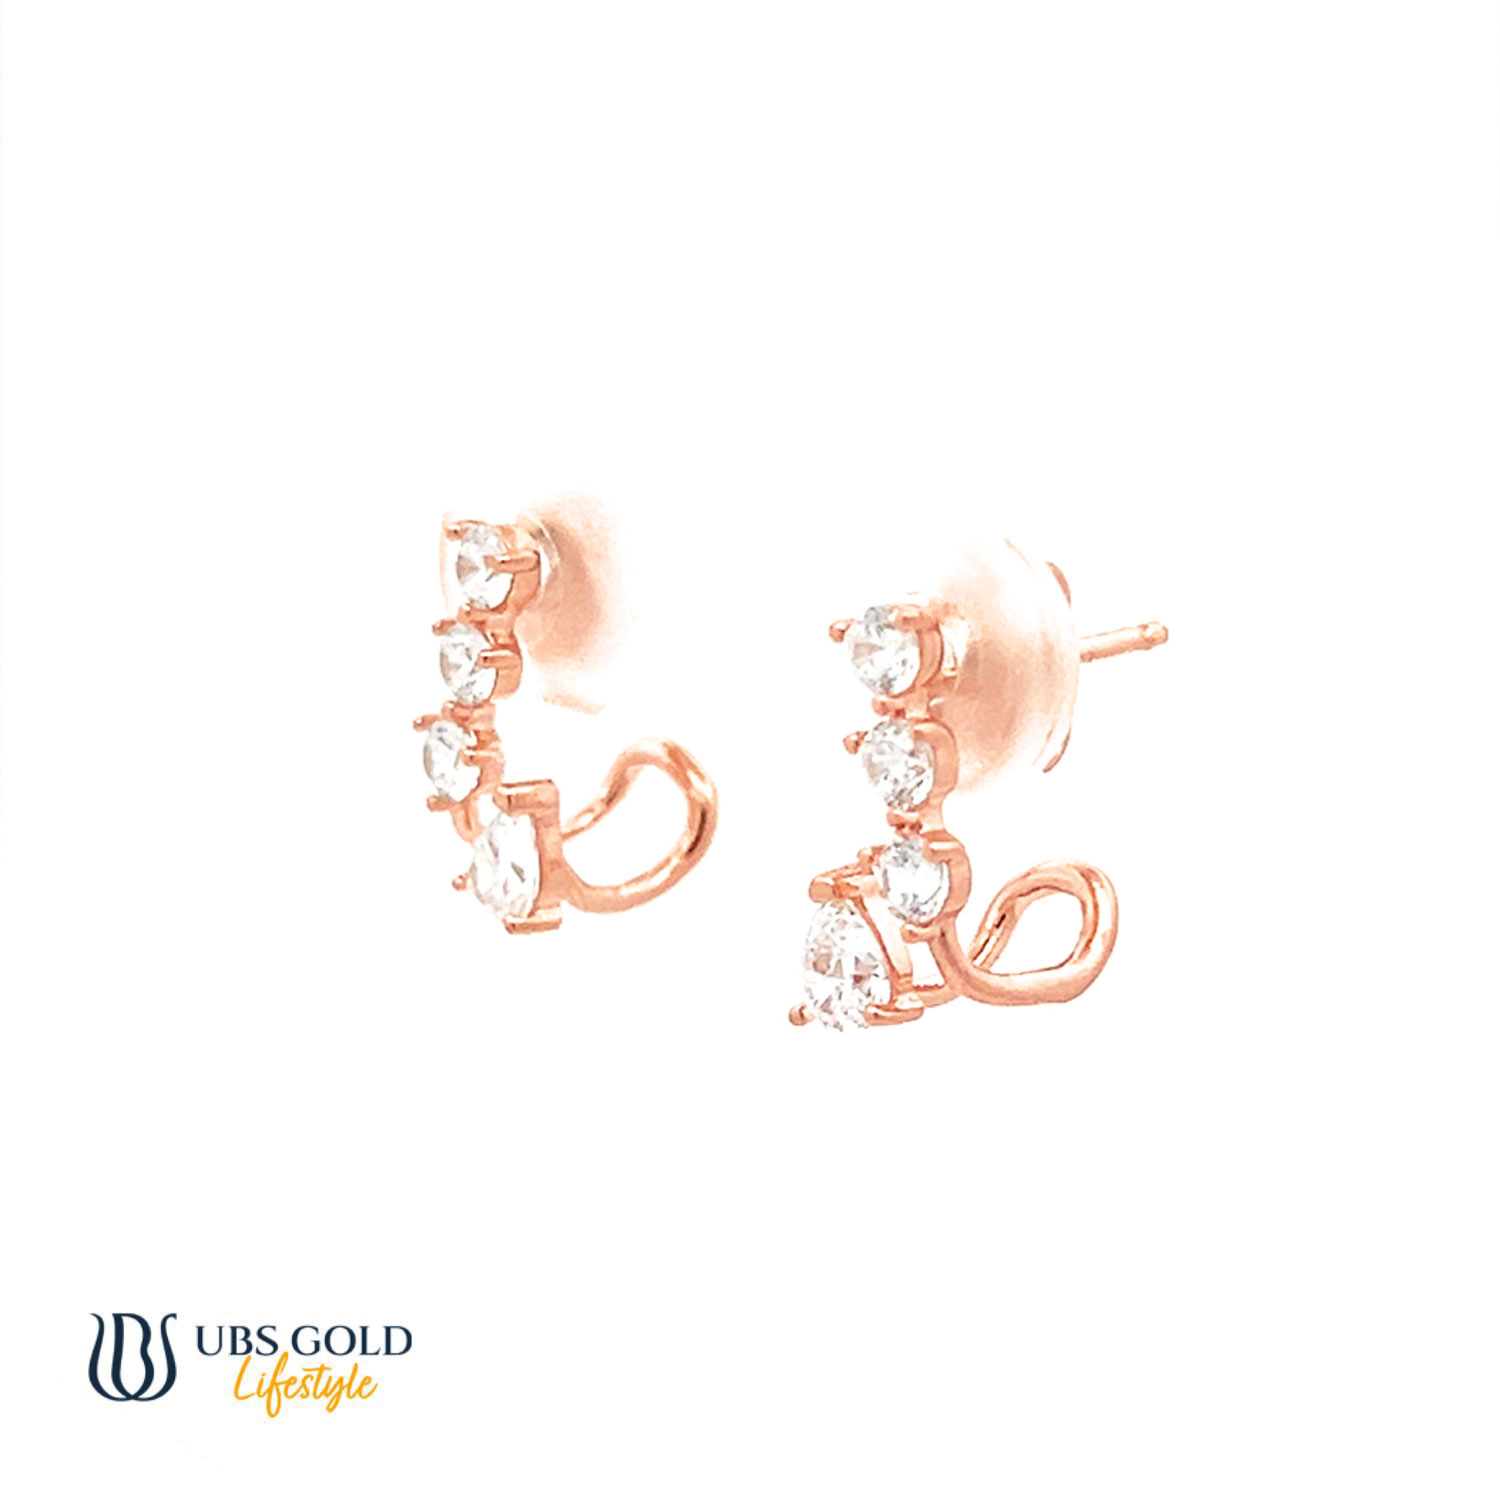 UBS Gold Anting Emas - Cwb0930 - 17K